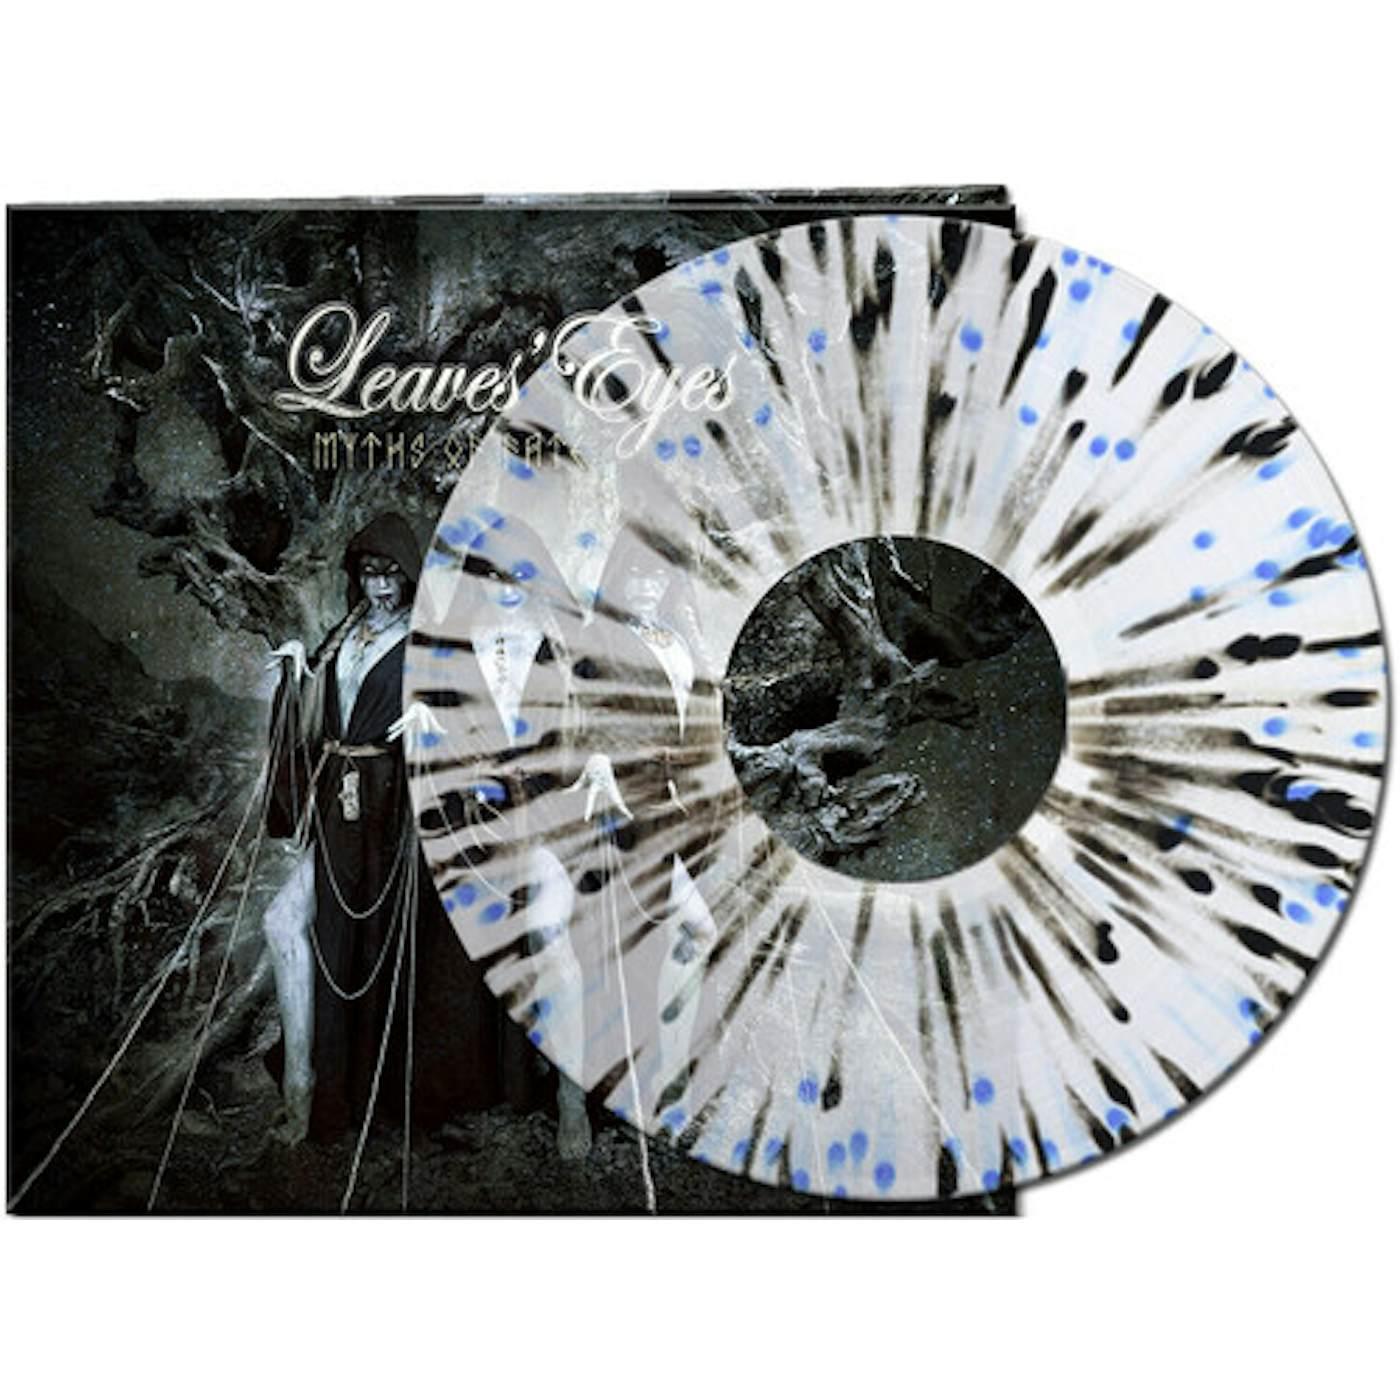 Leaves' Eyes MYTHS OF FATE - BLUE/BLACK SPLATTER Vinyl Record - Black Vinyl, Blue Vinyl